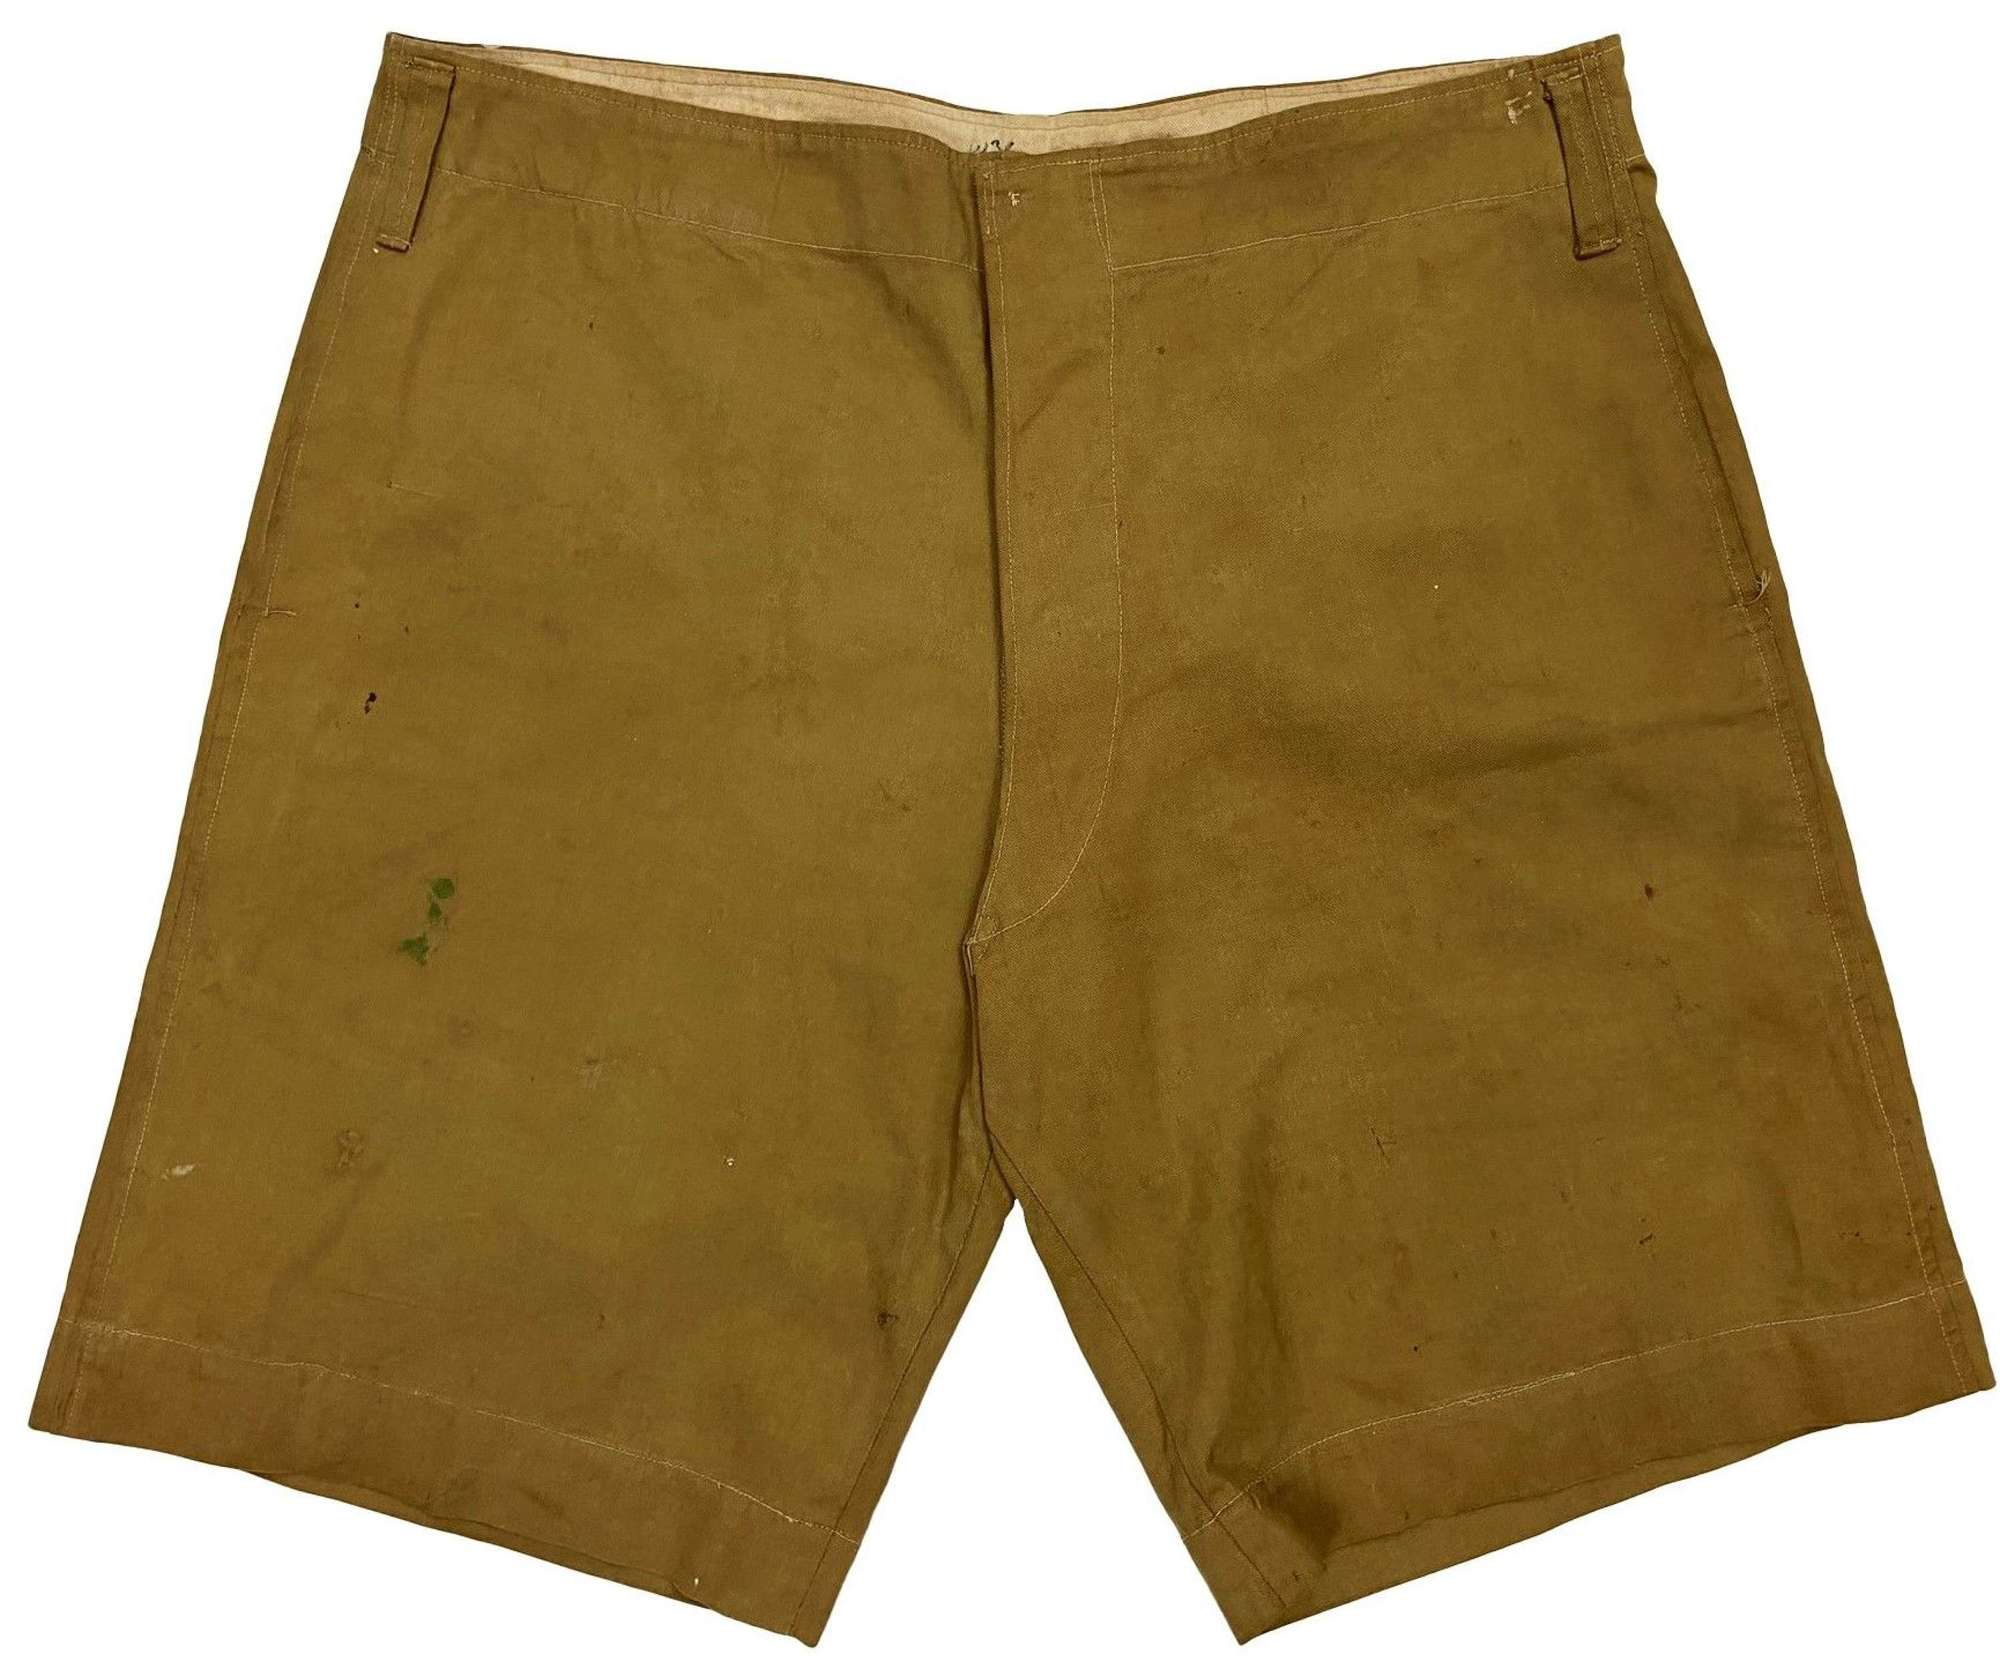 Original Early 20th Century Khaki Drill Shorts - Great War Officer?